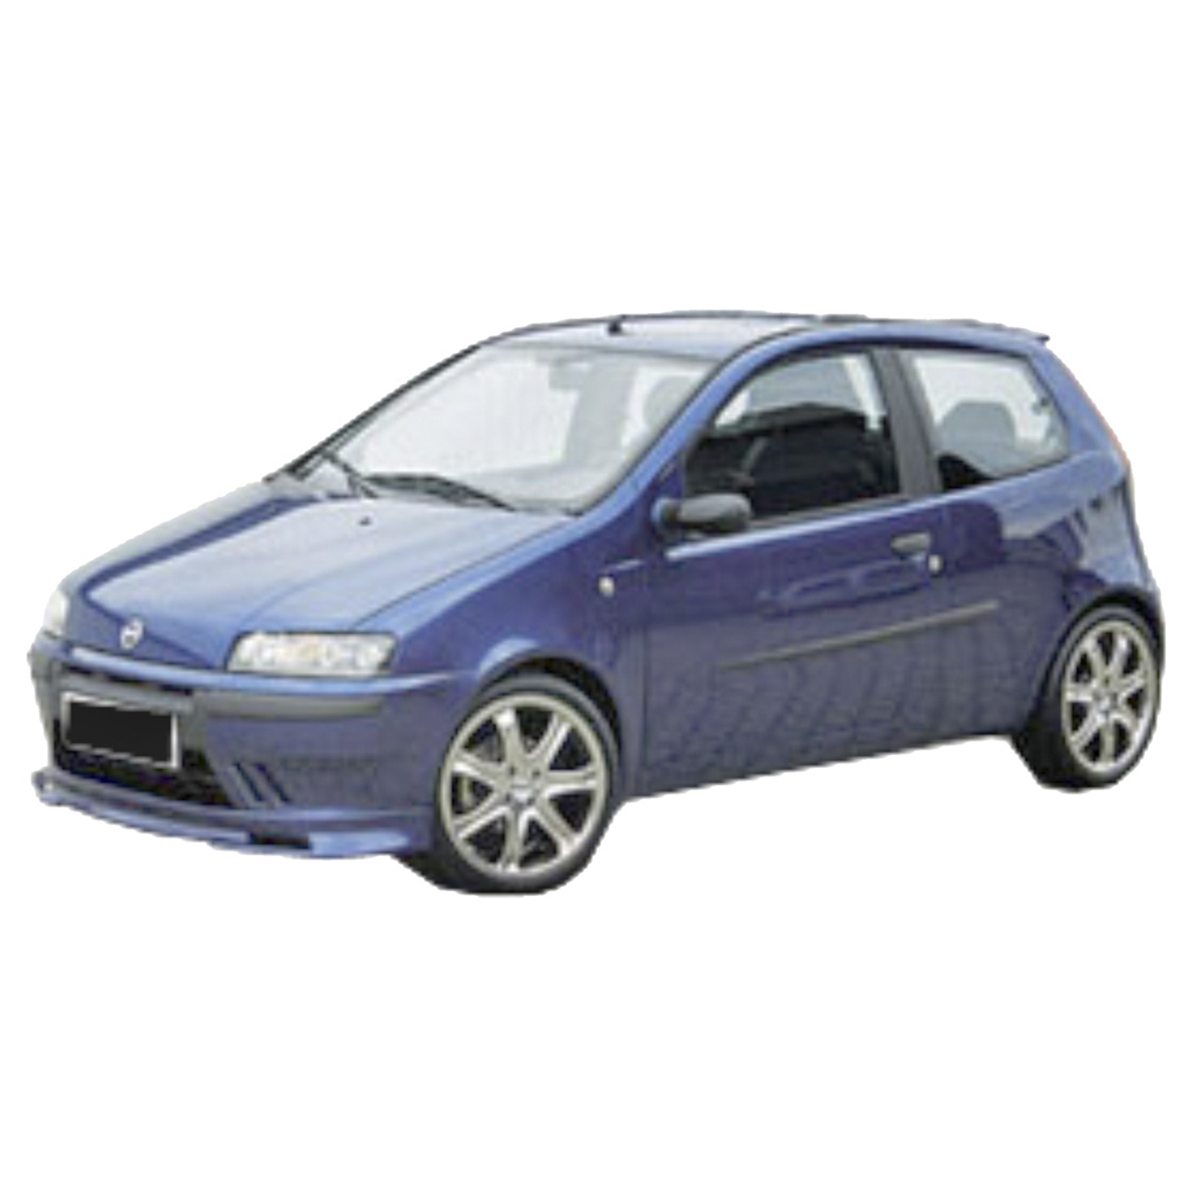 Fiat-Punto-00-Small-Frt-SPU0160